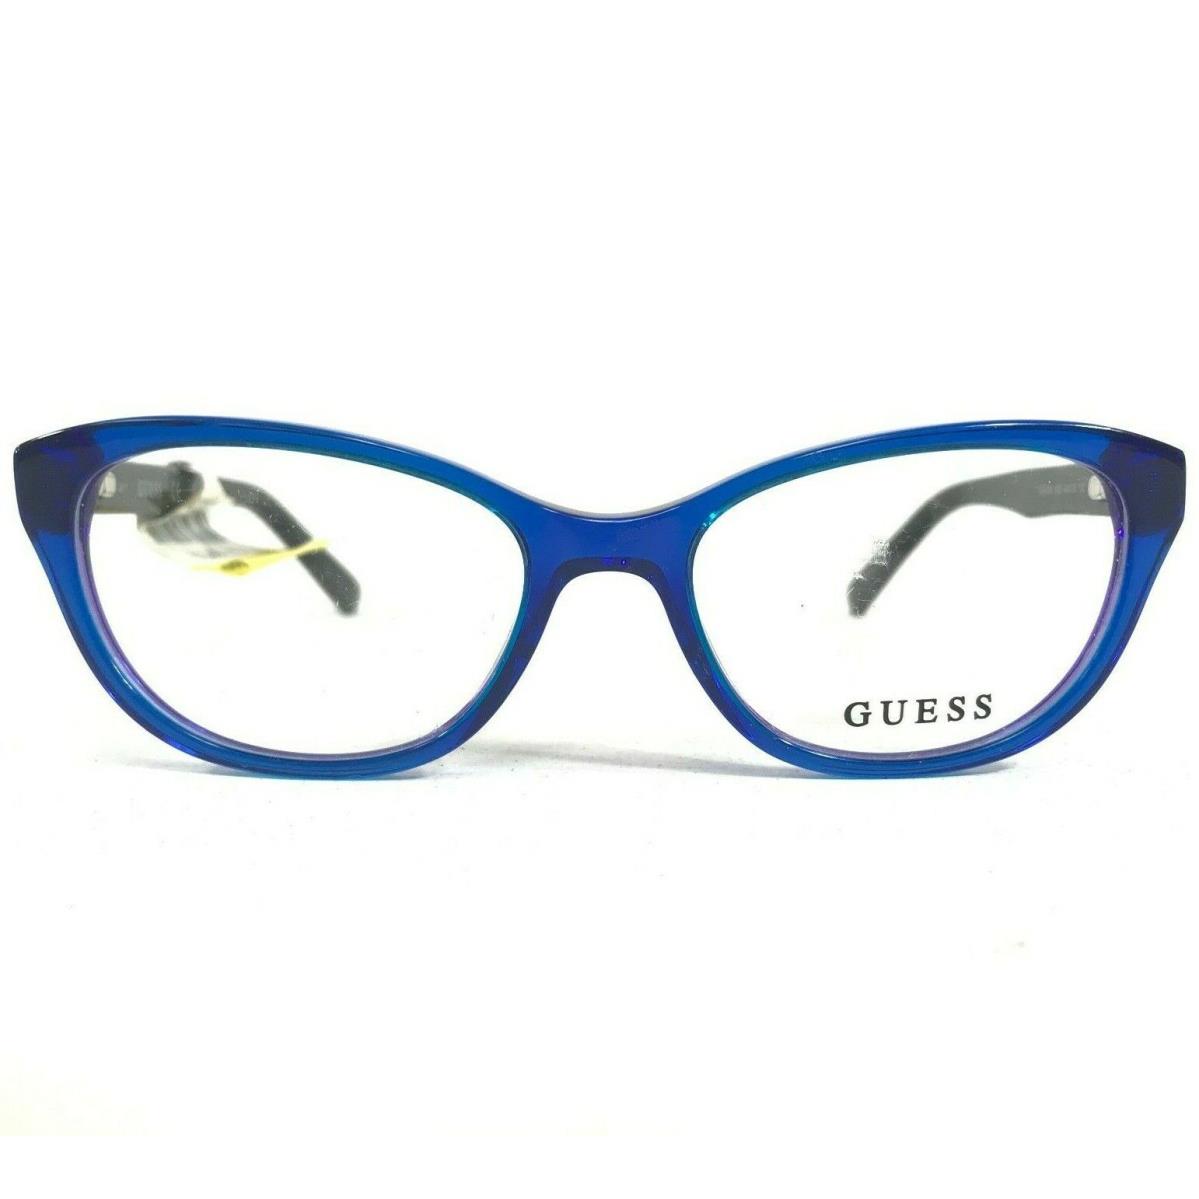 Guess eyeglasses  - Multicolor Frame 0